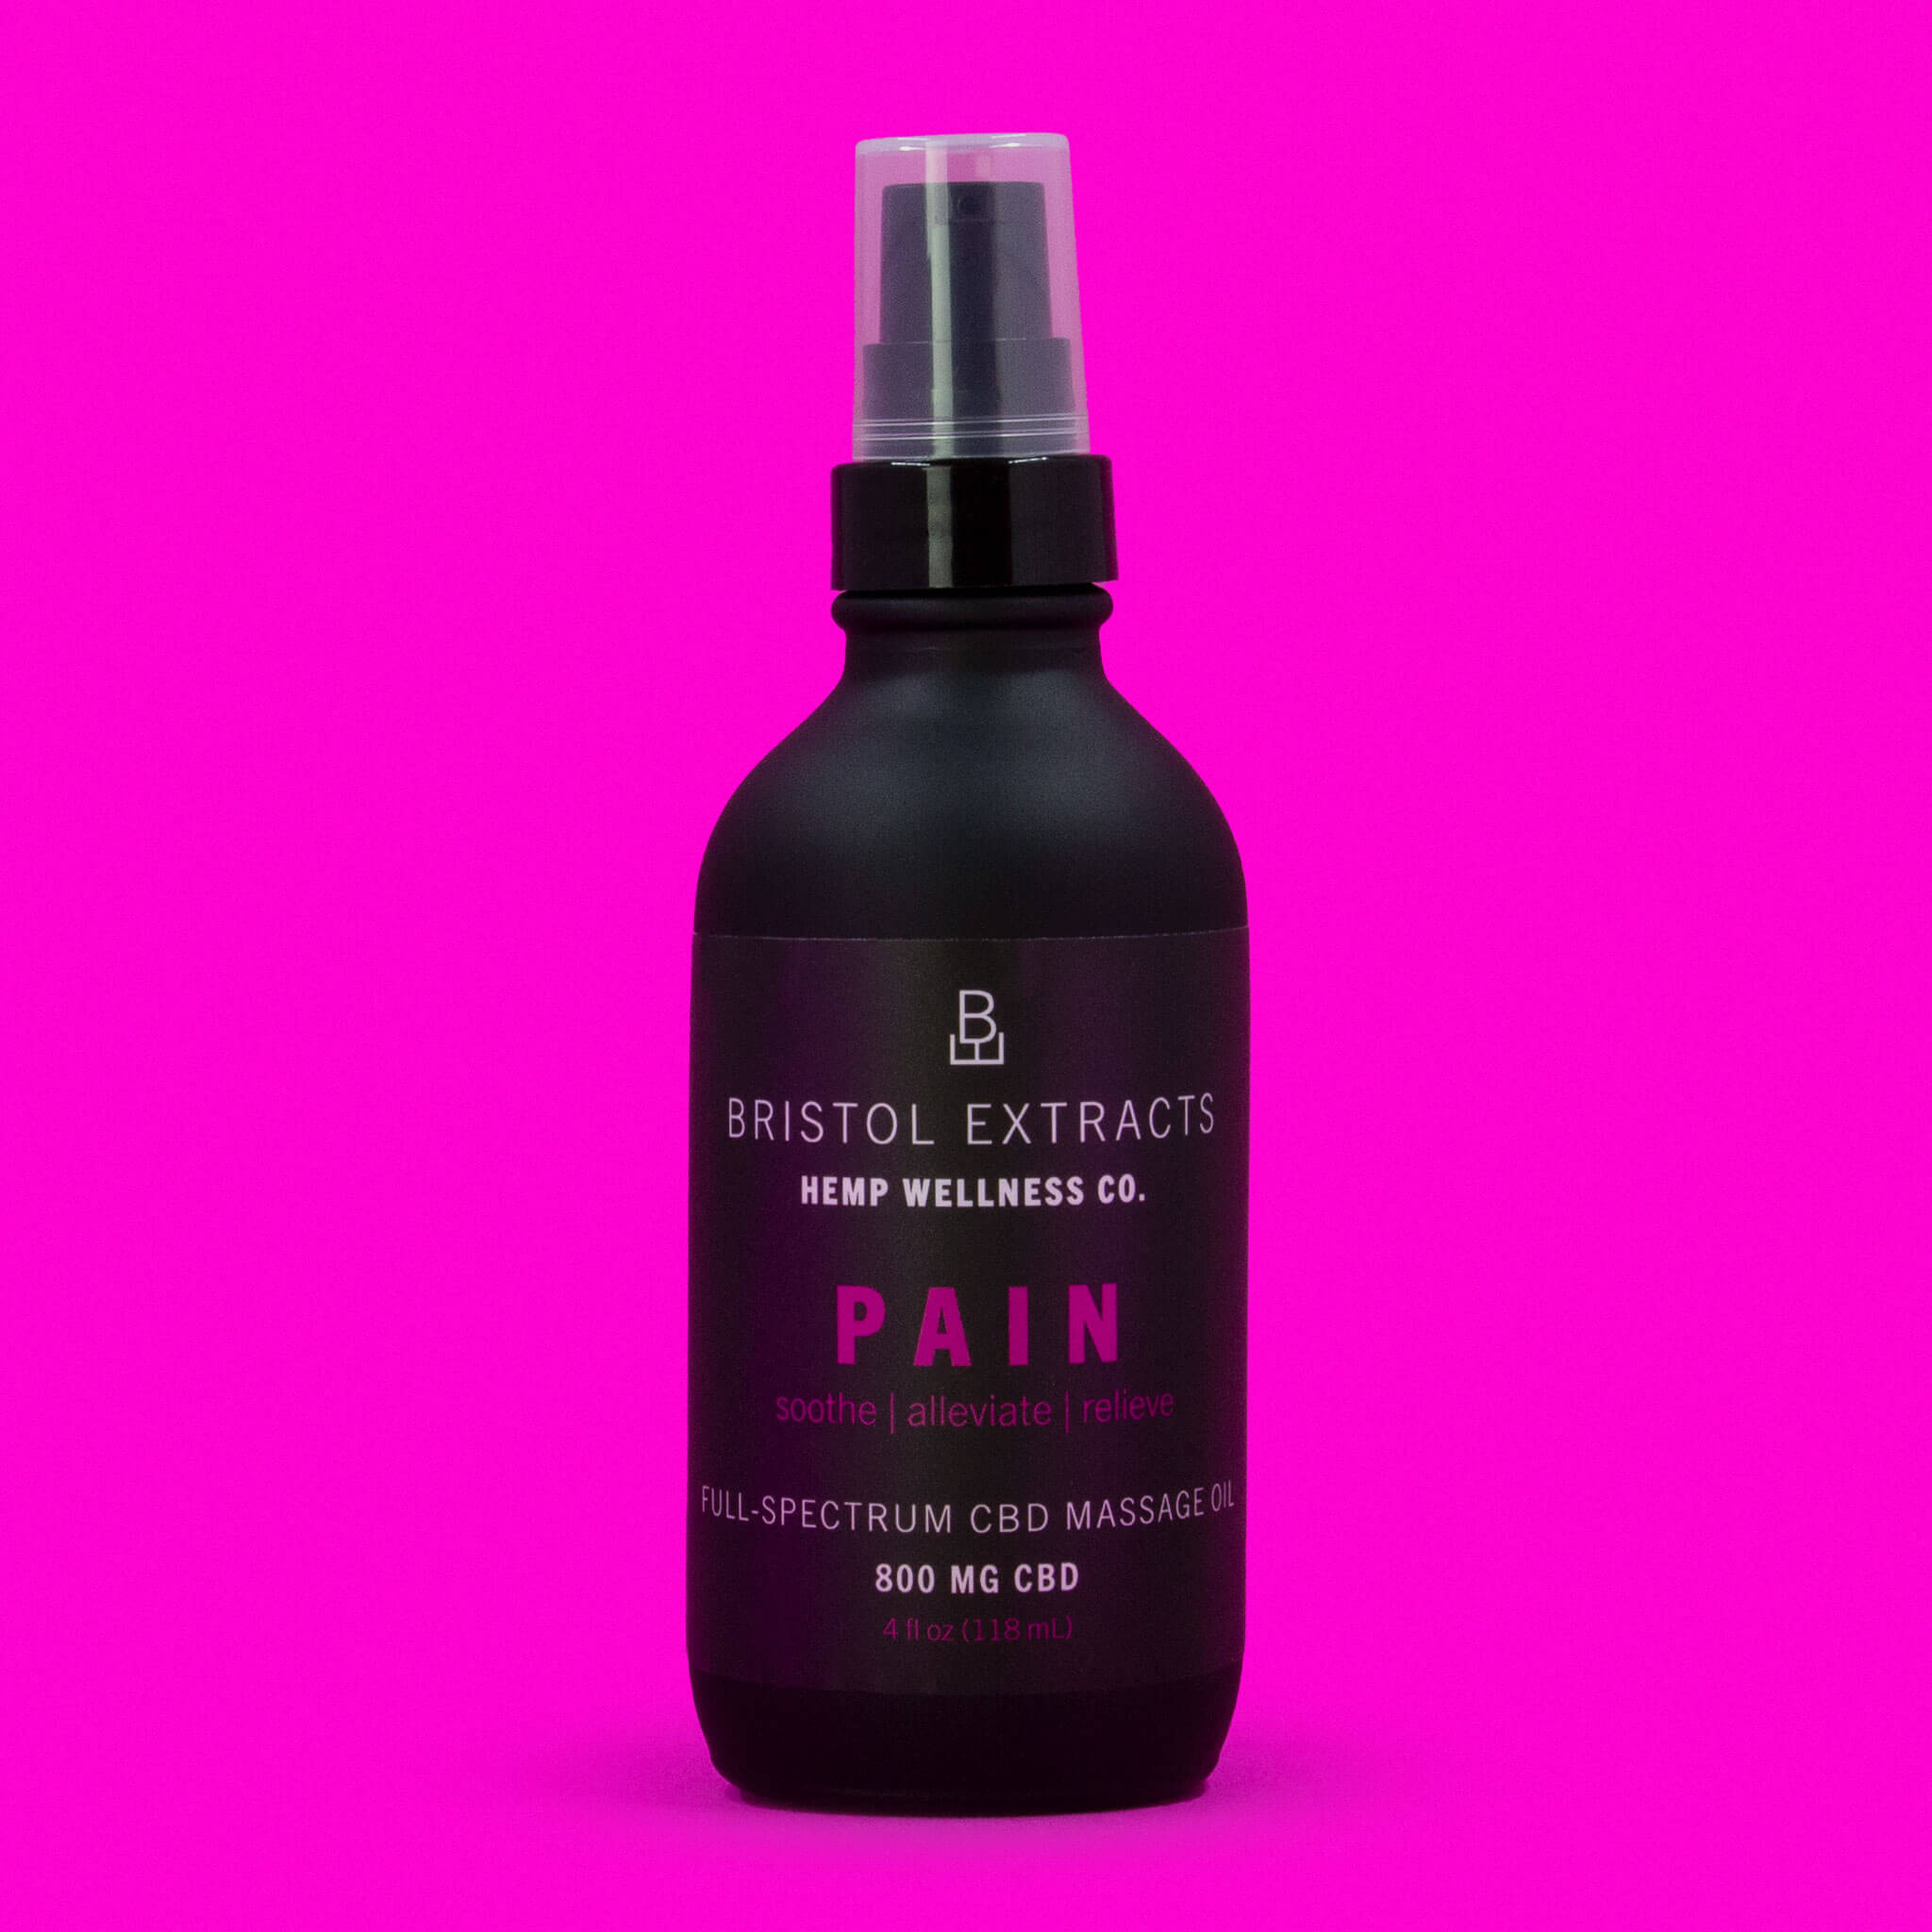 pain massage oil bottle on pink background